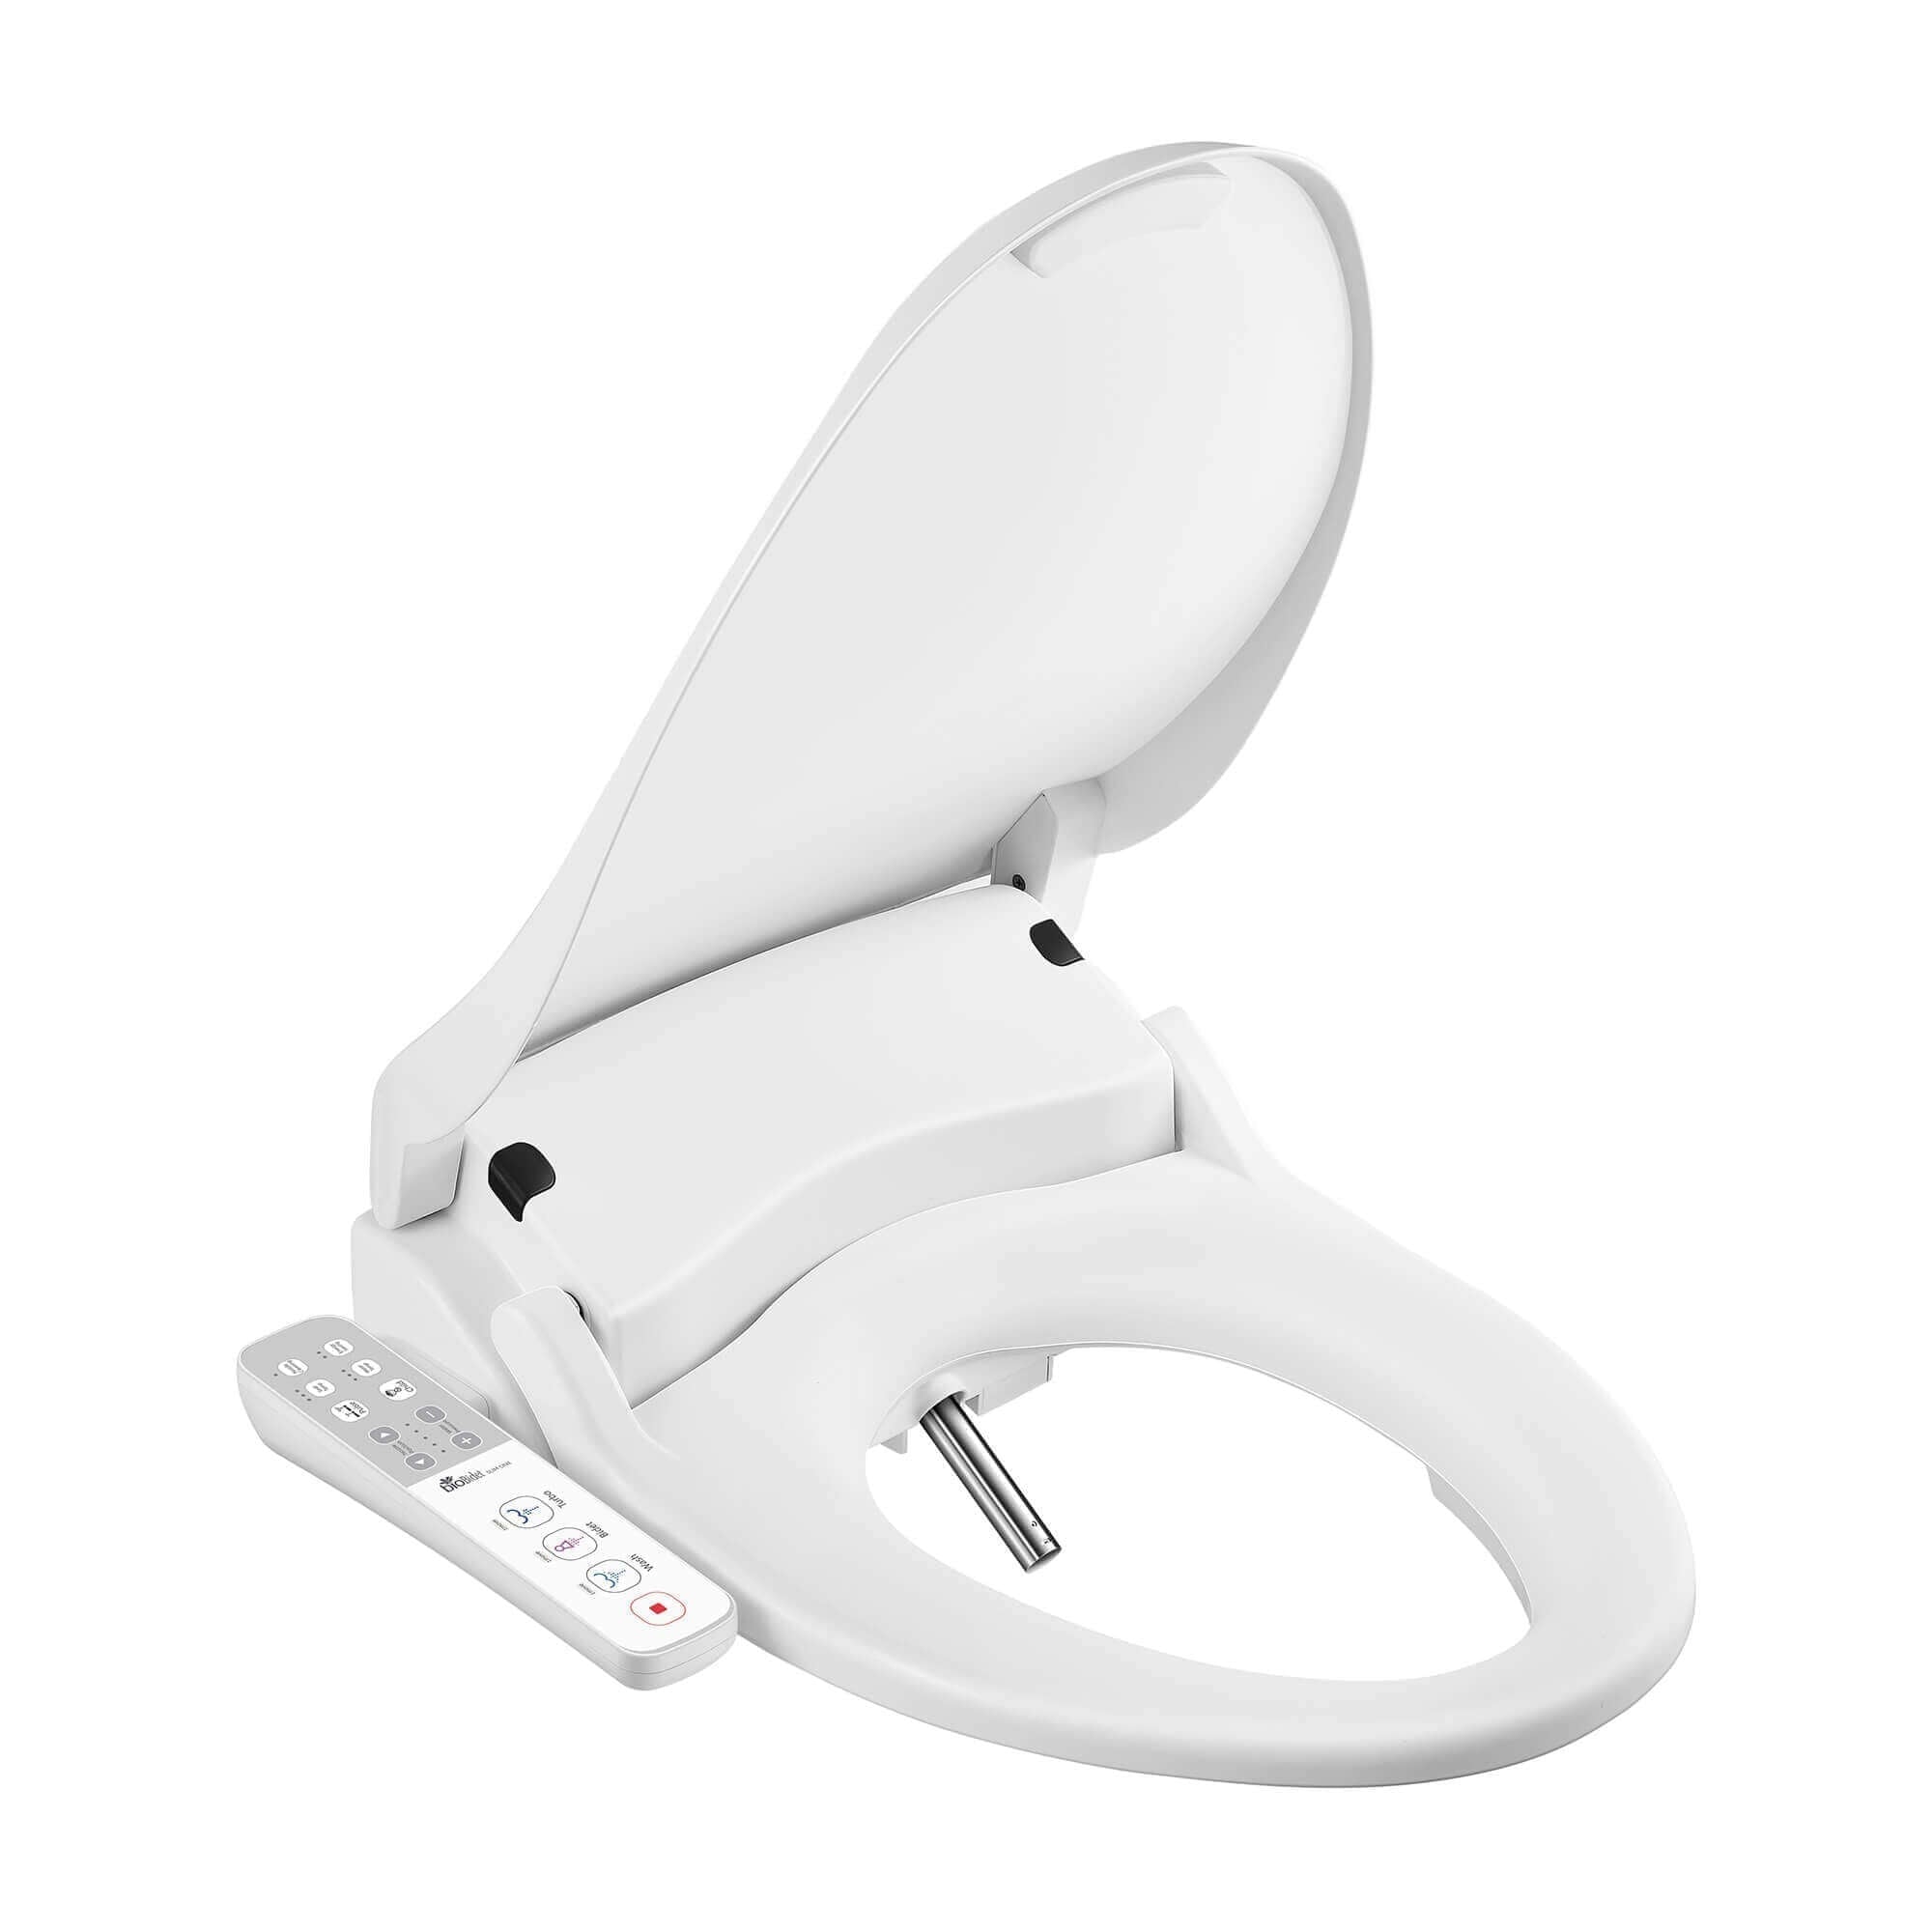 Bio Bidet Slim One Bidet Toilet Seat with Oscillating Self-Cleaning Nozzle, Nightlight, Turbo Wash and Side Panel Controls